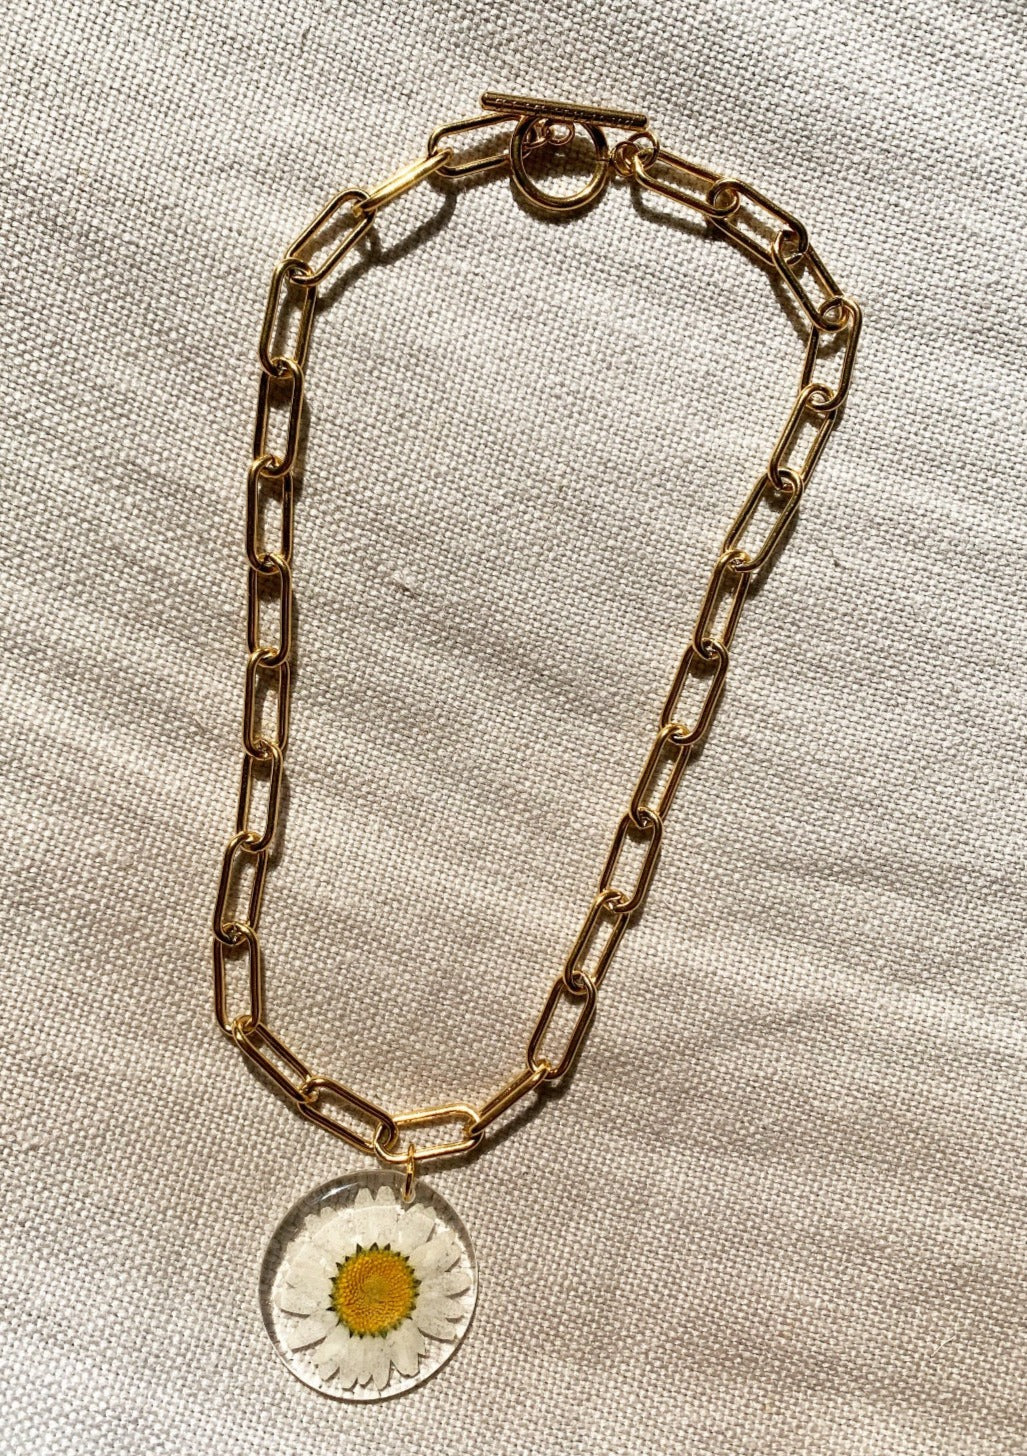 Resin coated daisy on chunky gold chain.